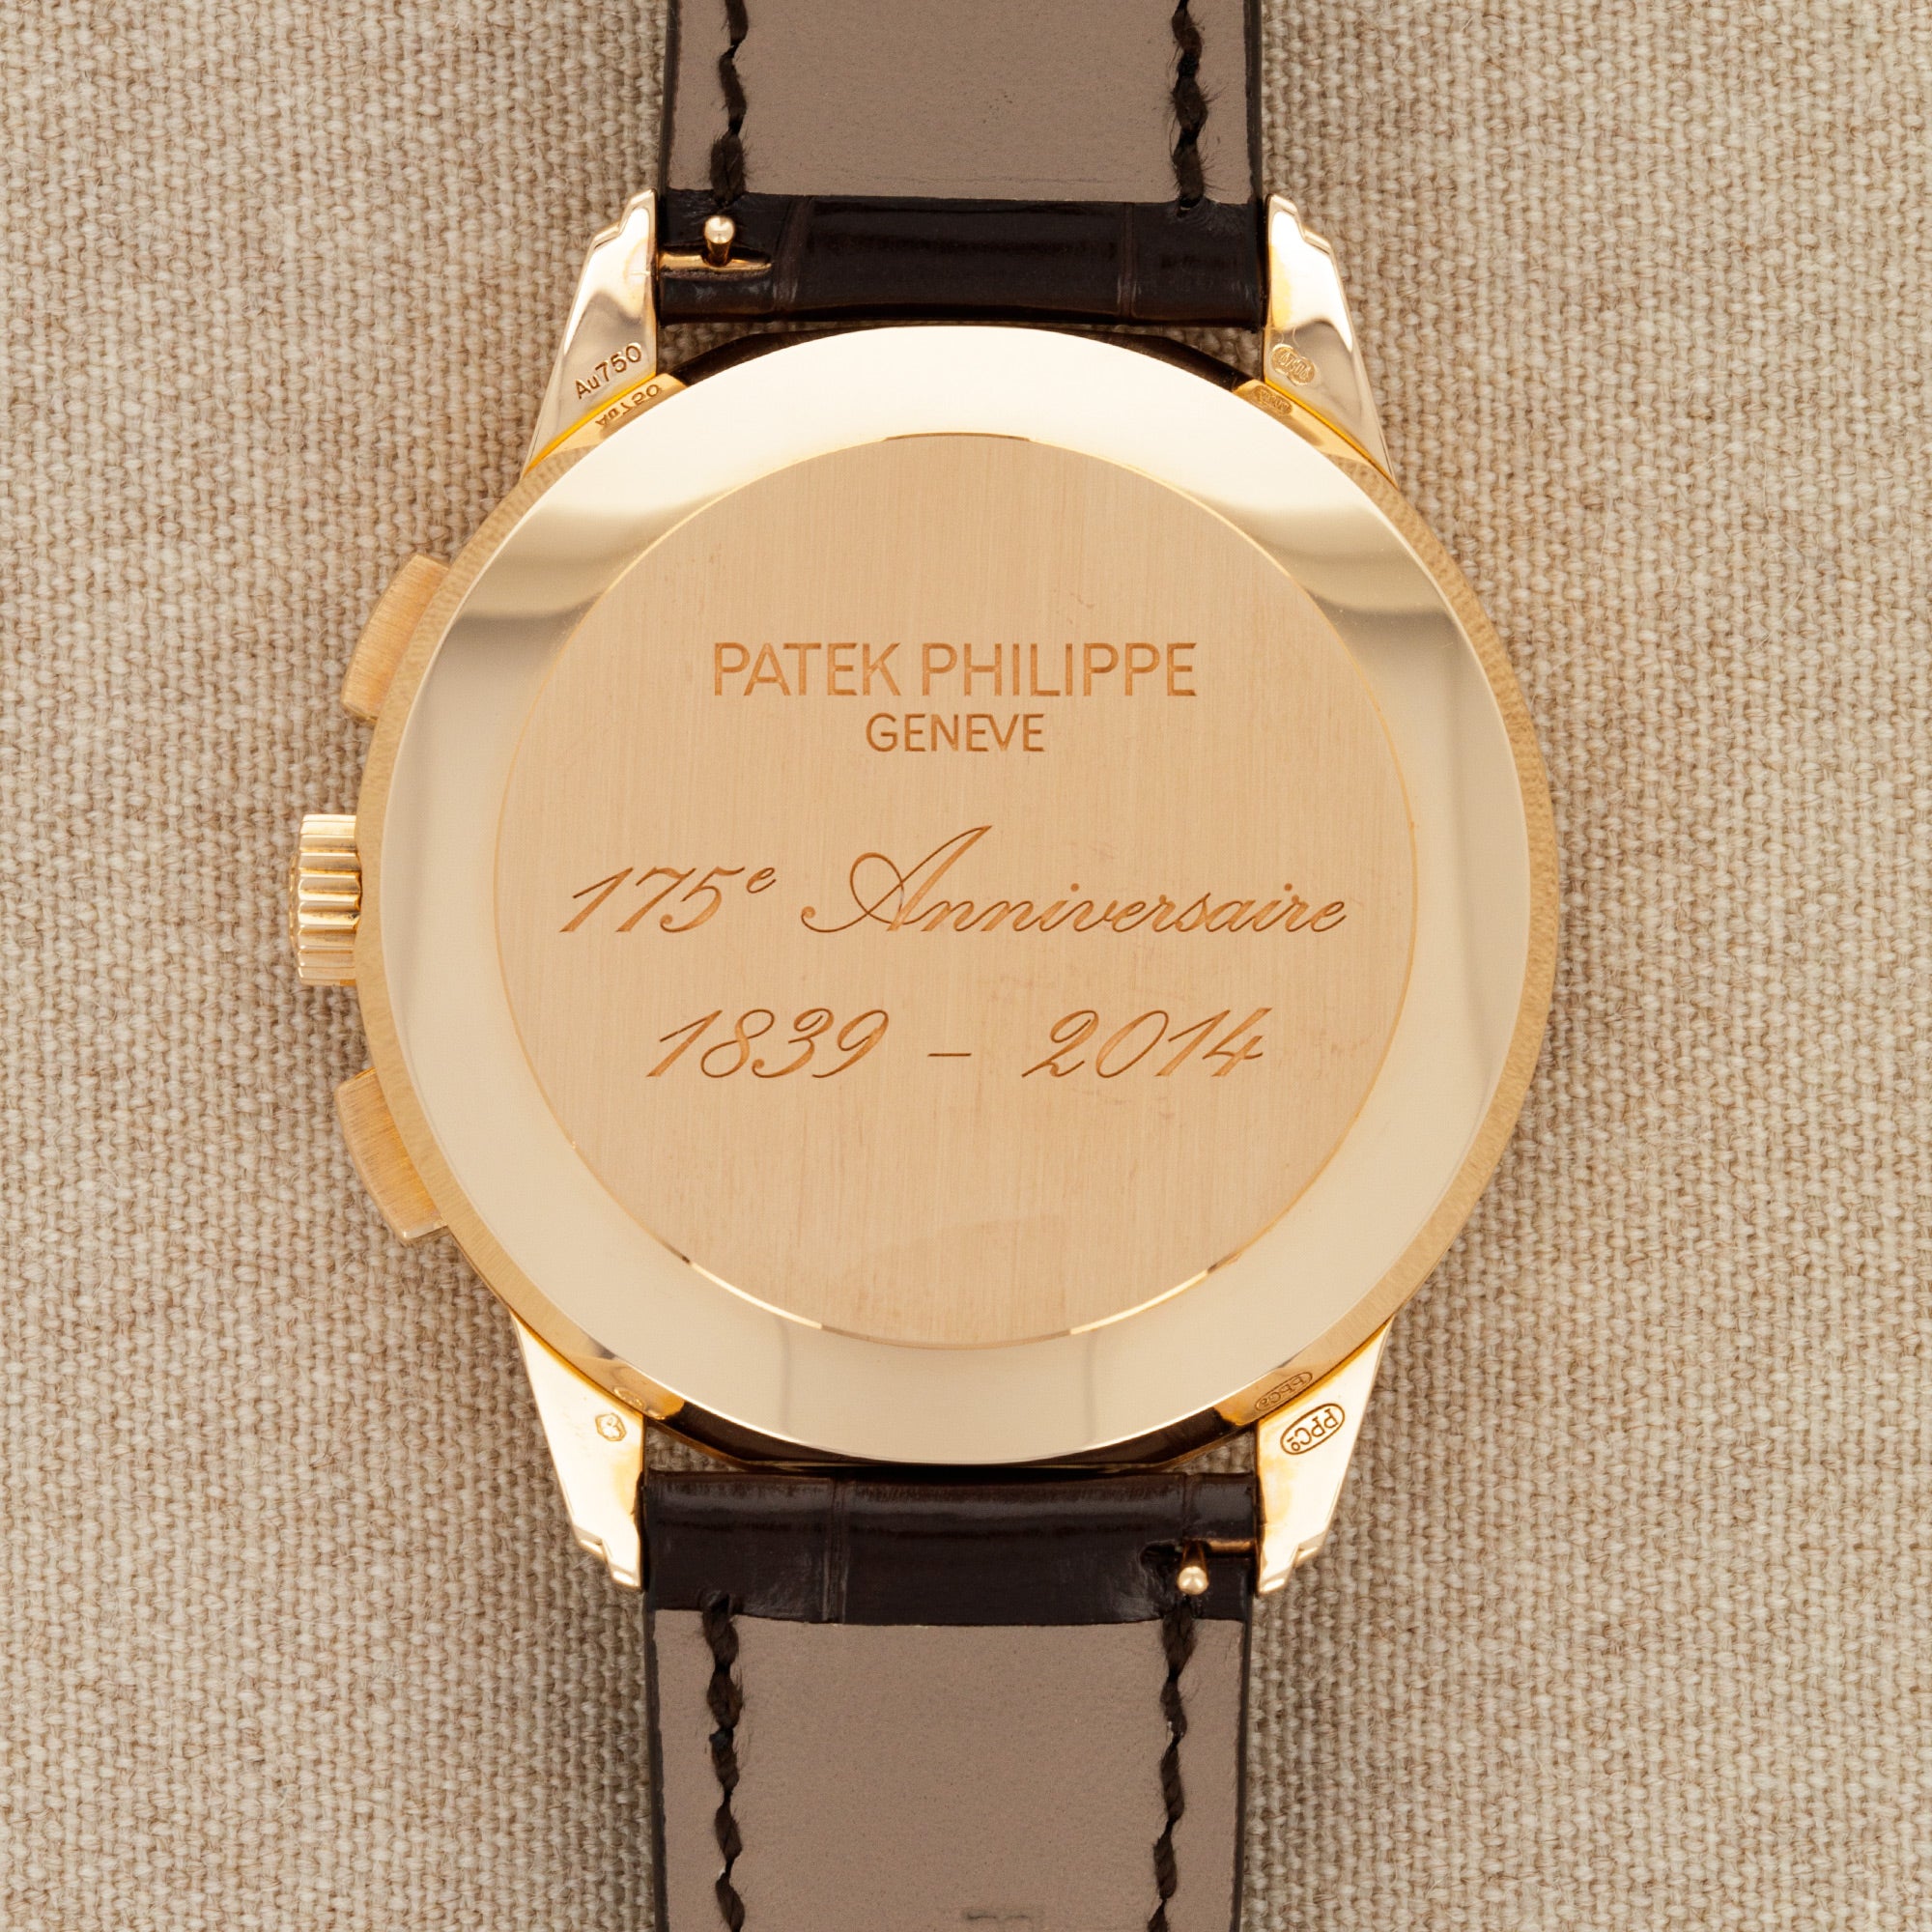 Patek Philippe - Patek Philippe Rose Gold Chronograph 175th Anniversary Watch Ref. 5975 - The Keystone Watches